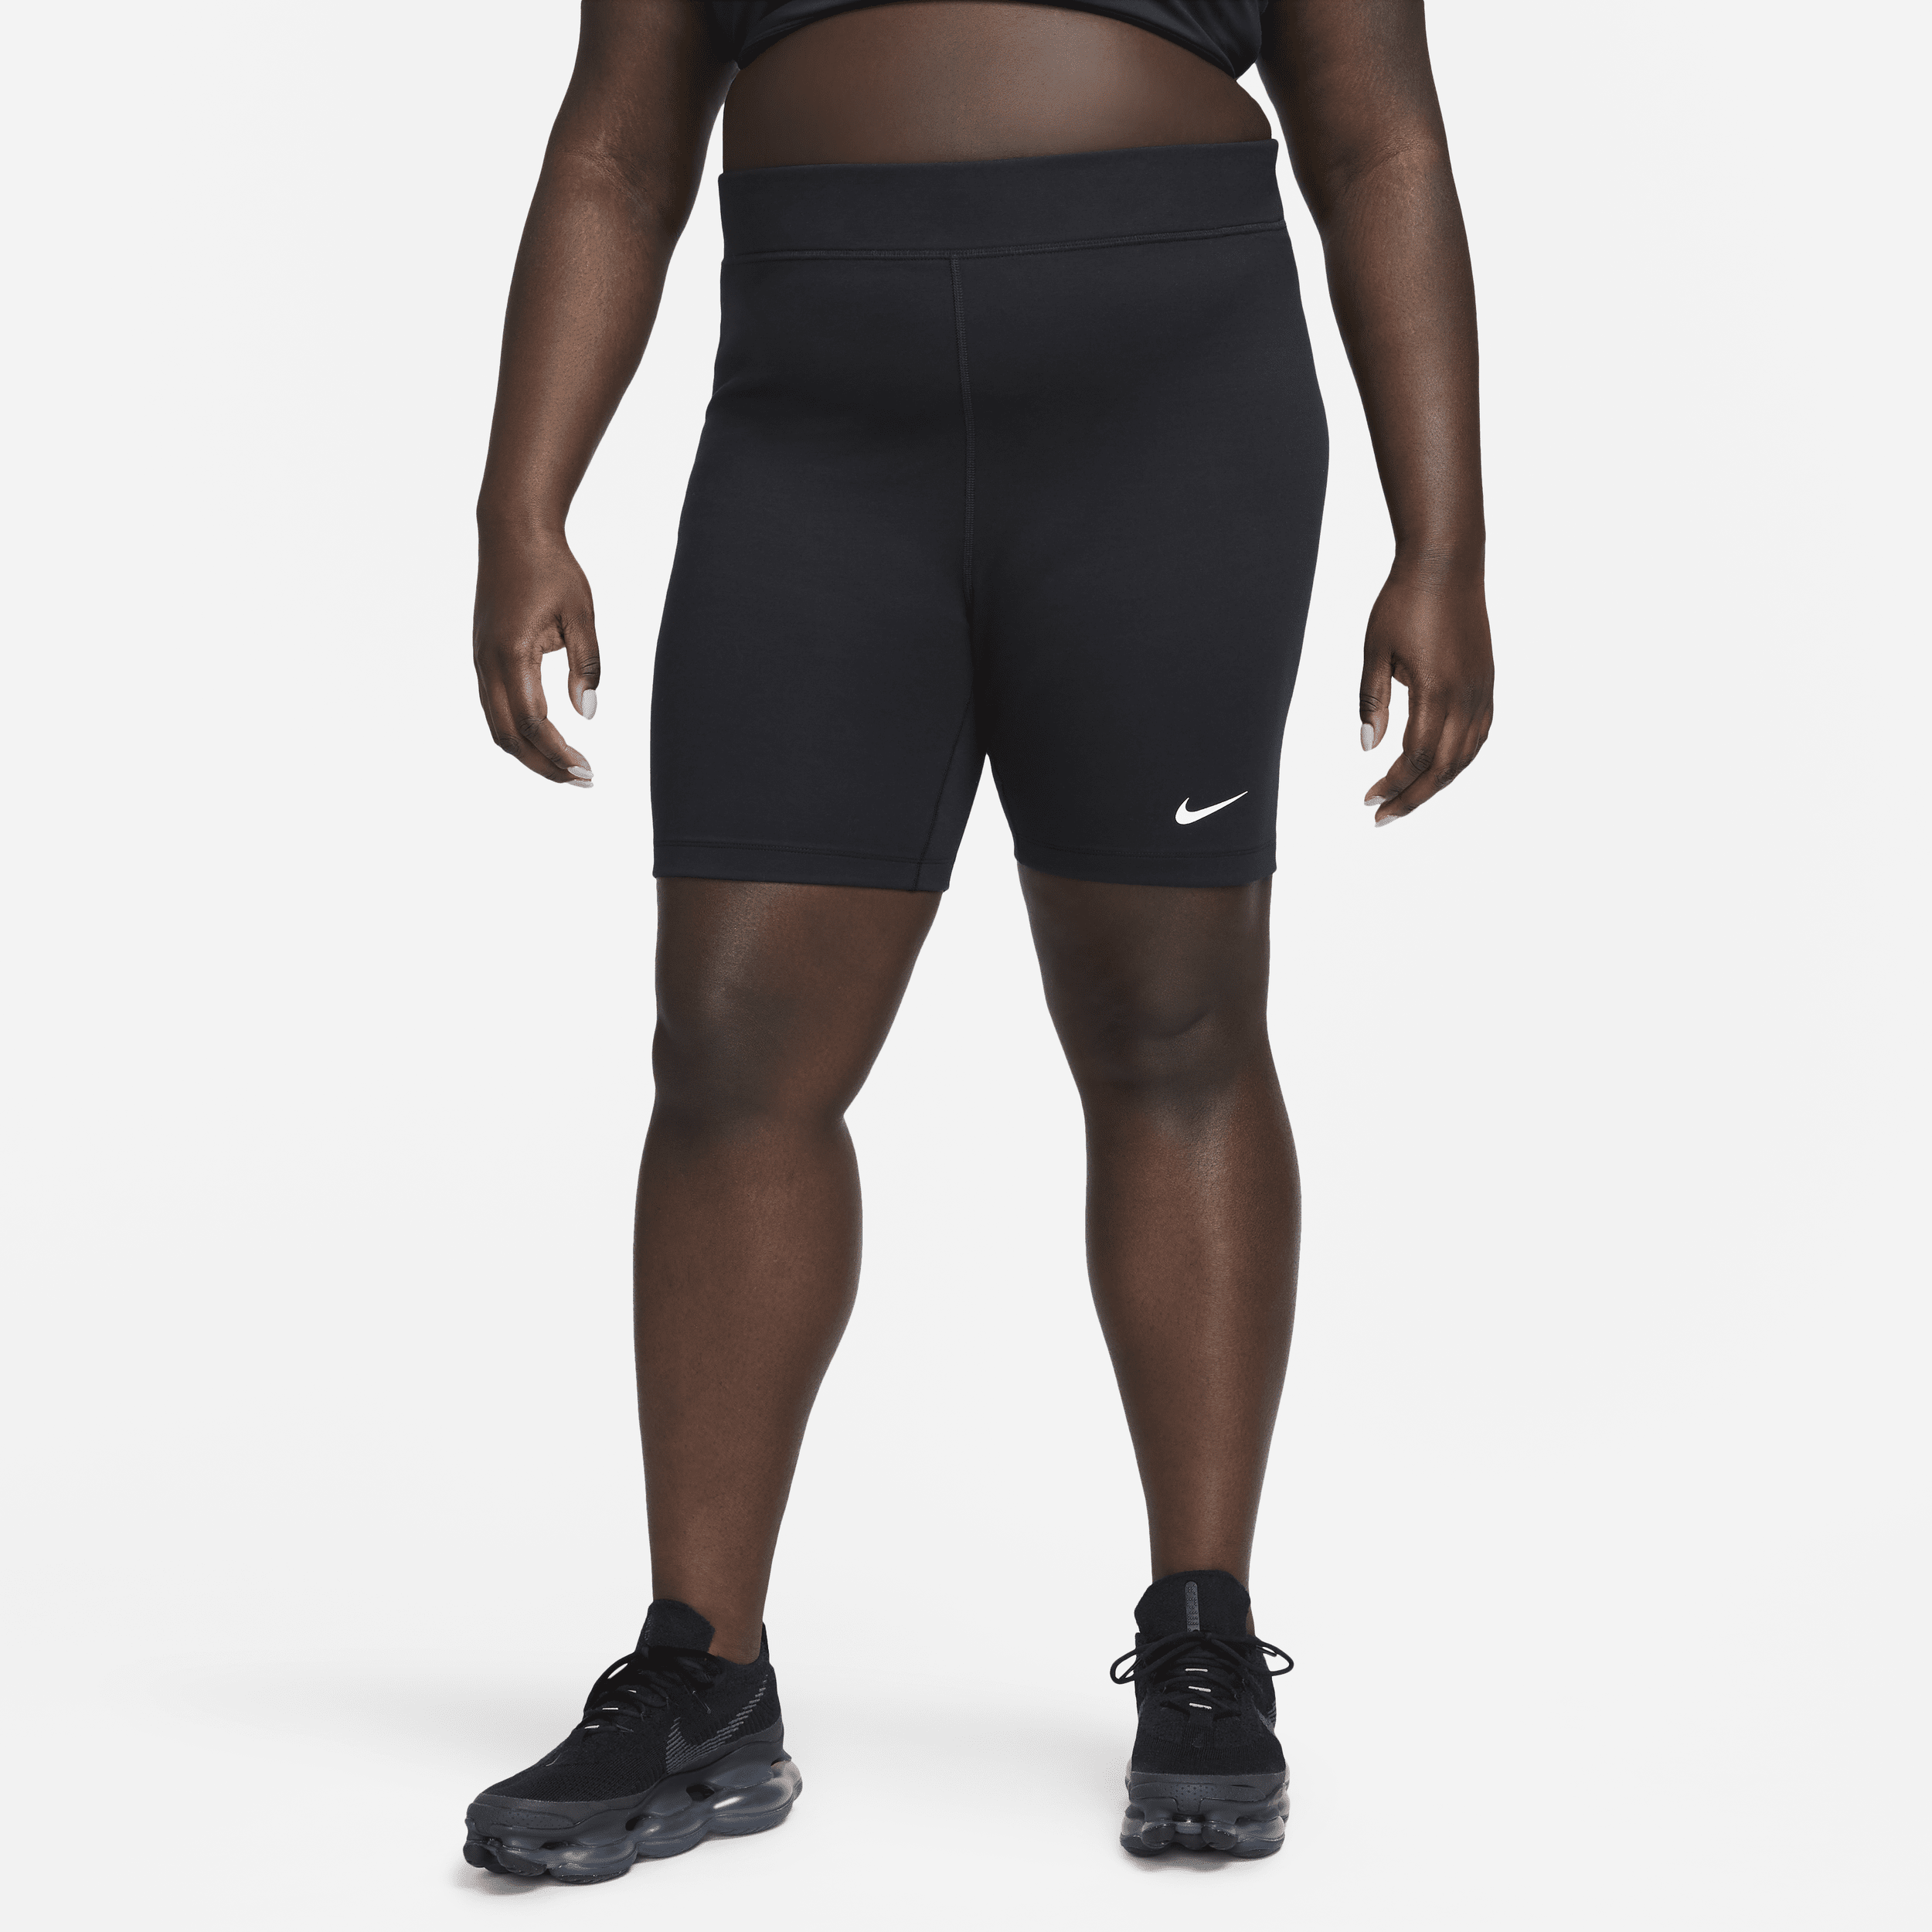 Nike Sportswear Classic-cykelshorts med høj talje (20 cm) til kvinder (plus size) - sort